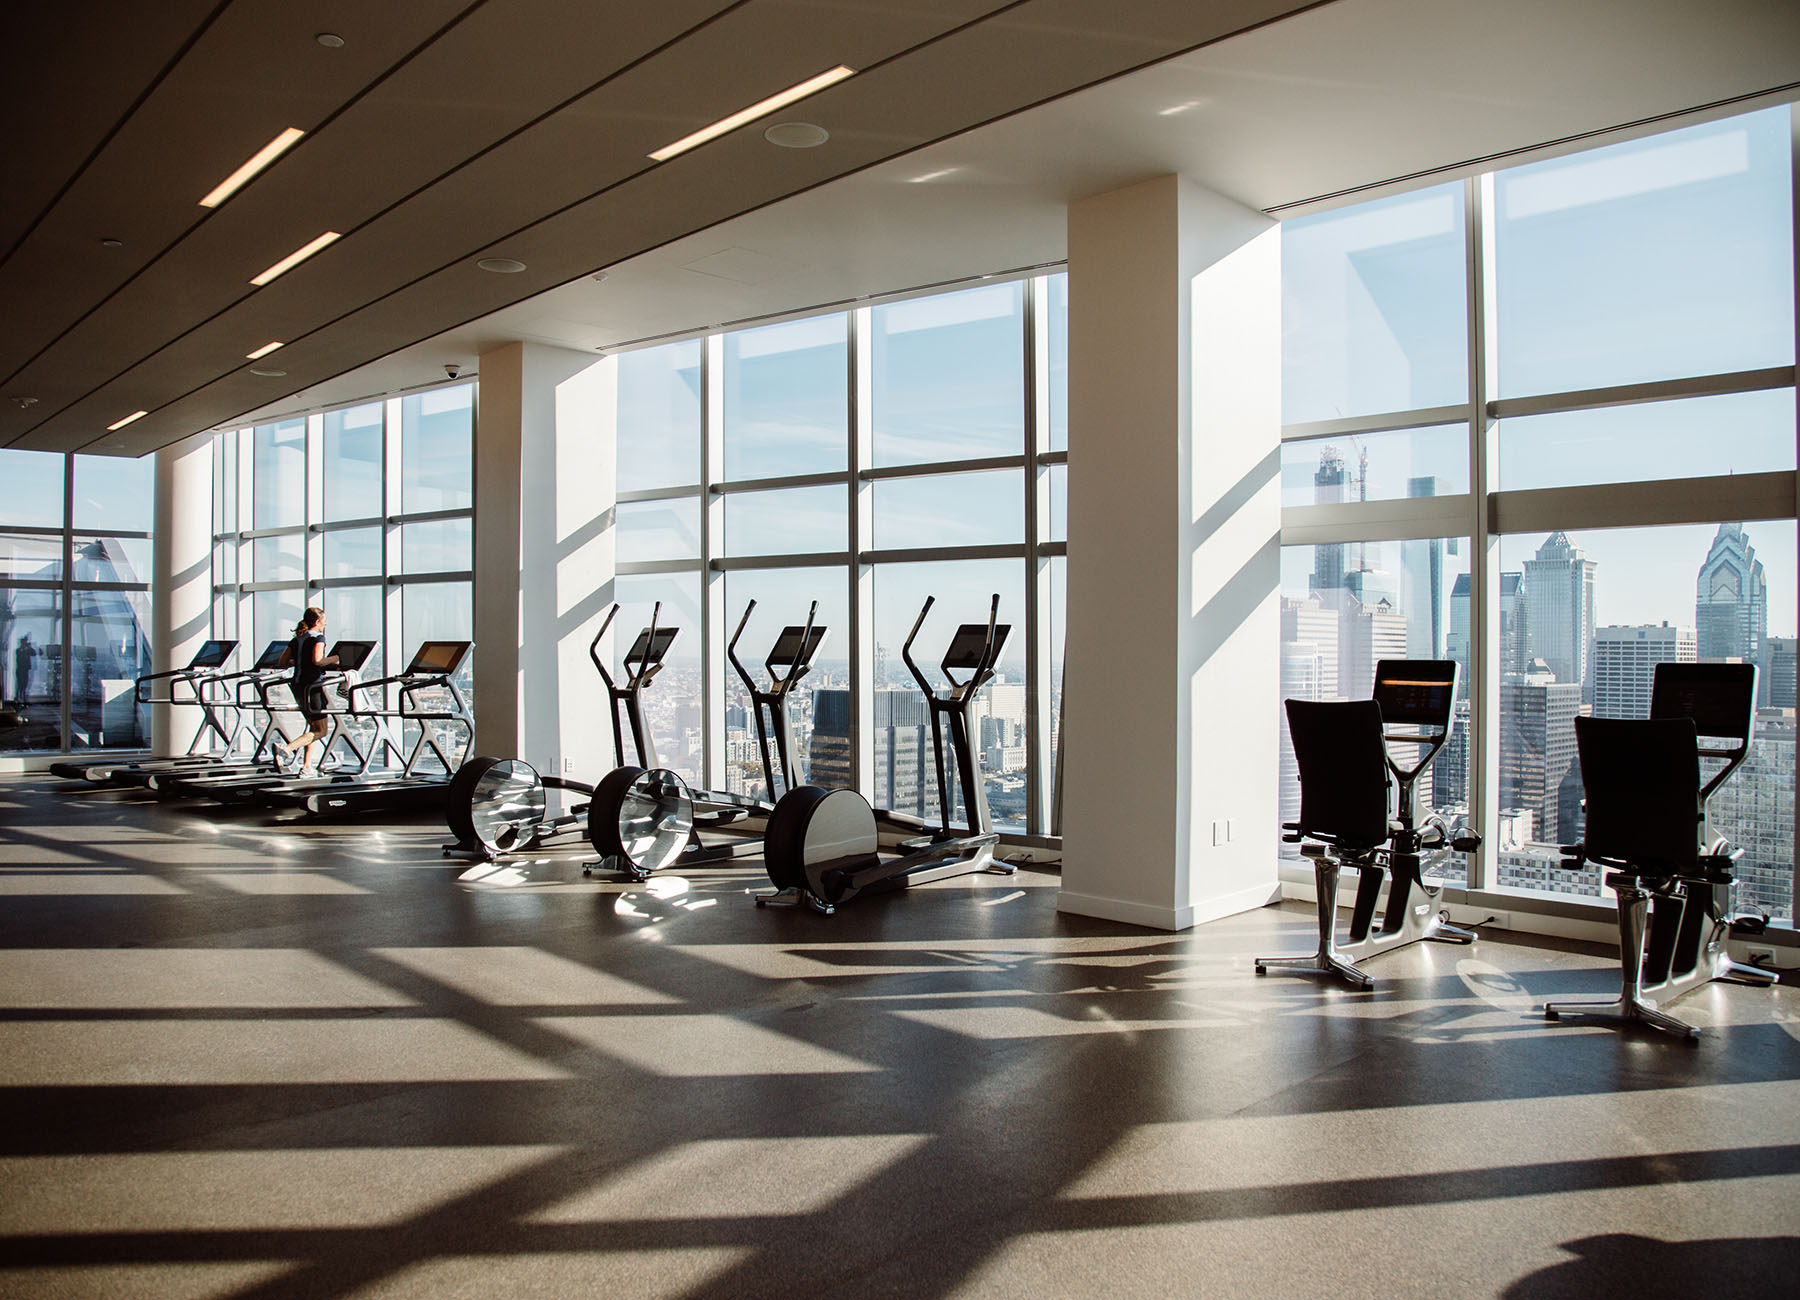 AKA University City fitness center with cardio equipment overlooking the Philadelphia skyline